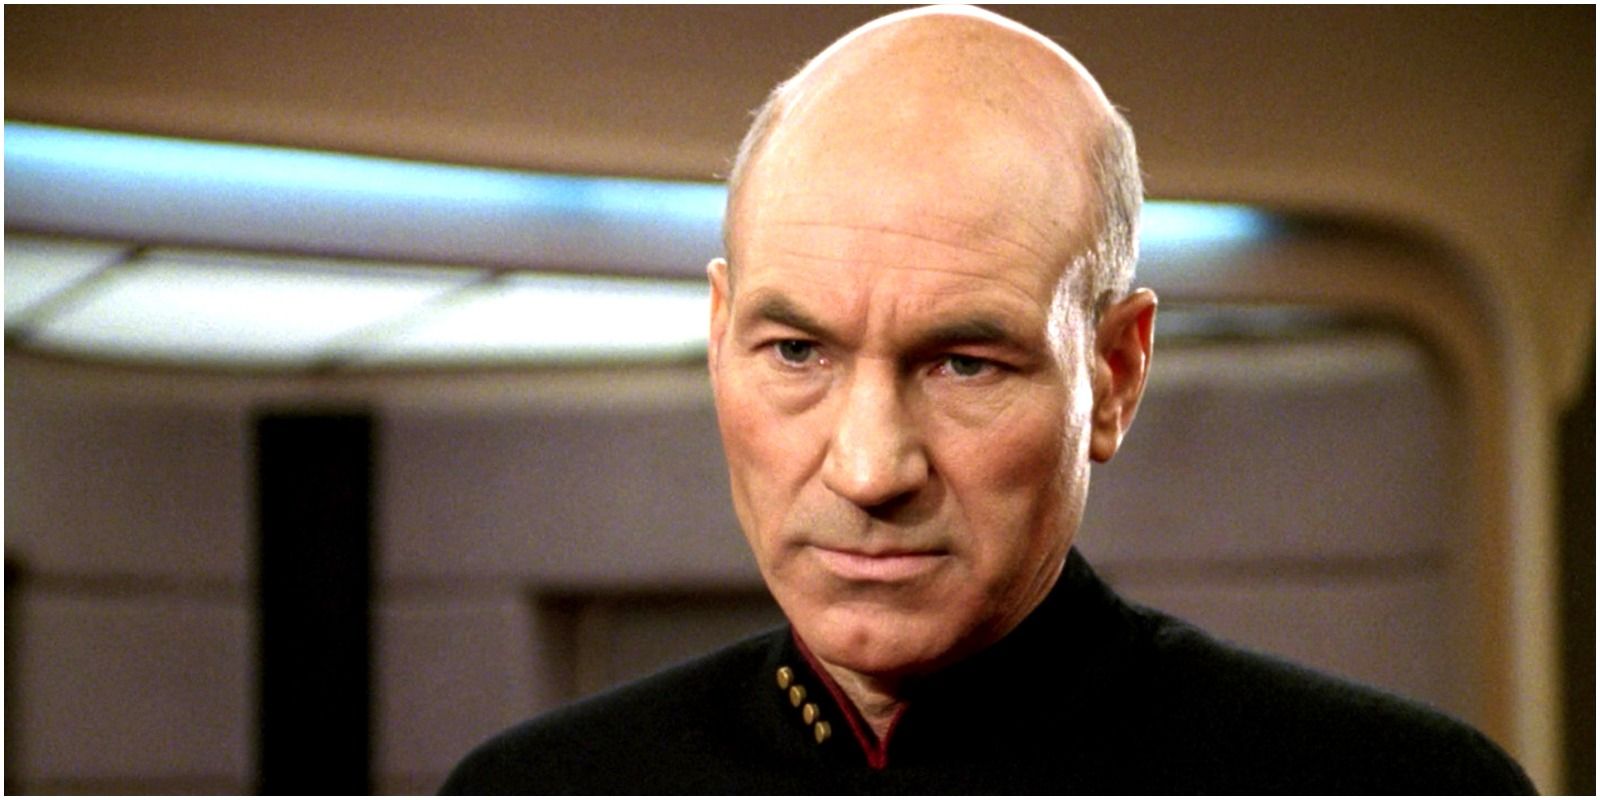 Picard from Star Trek TNG